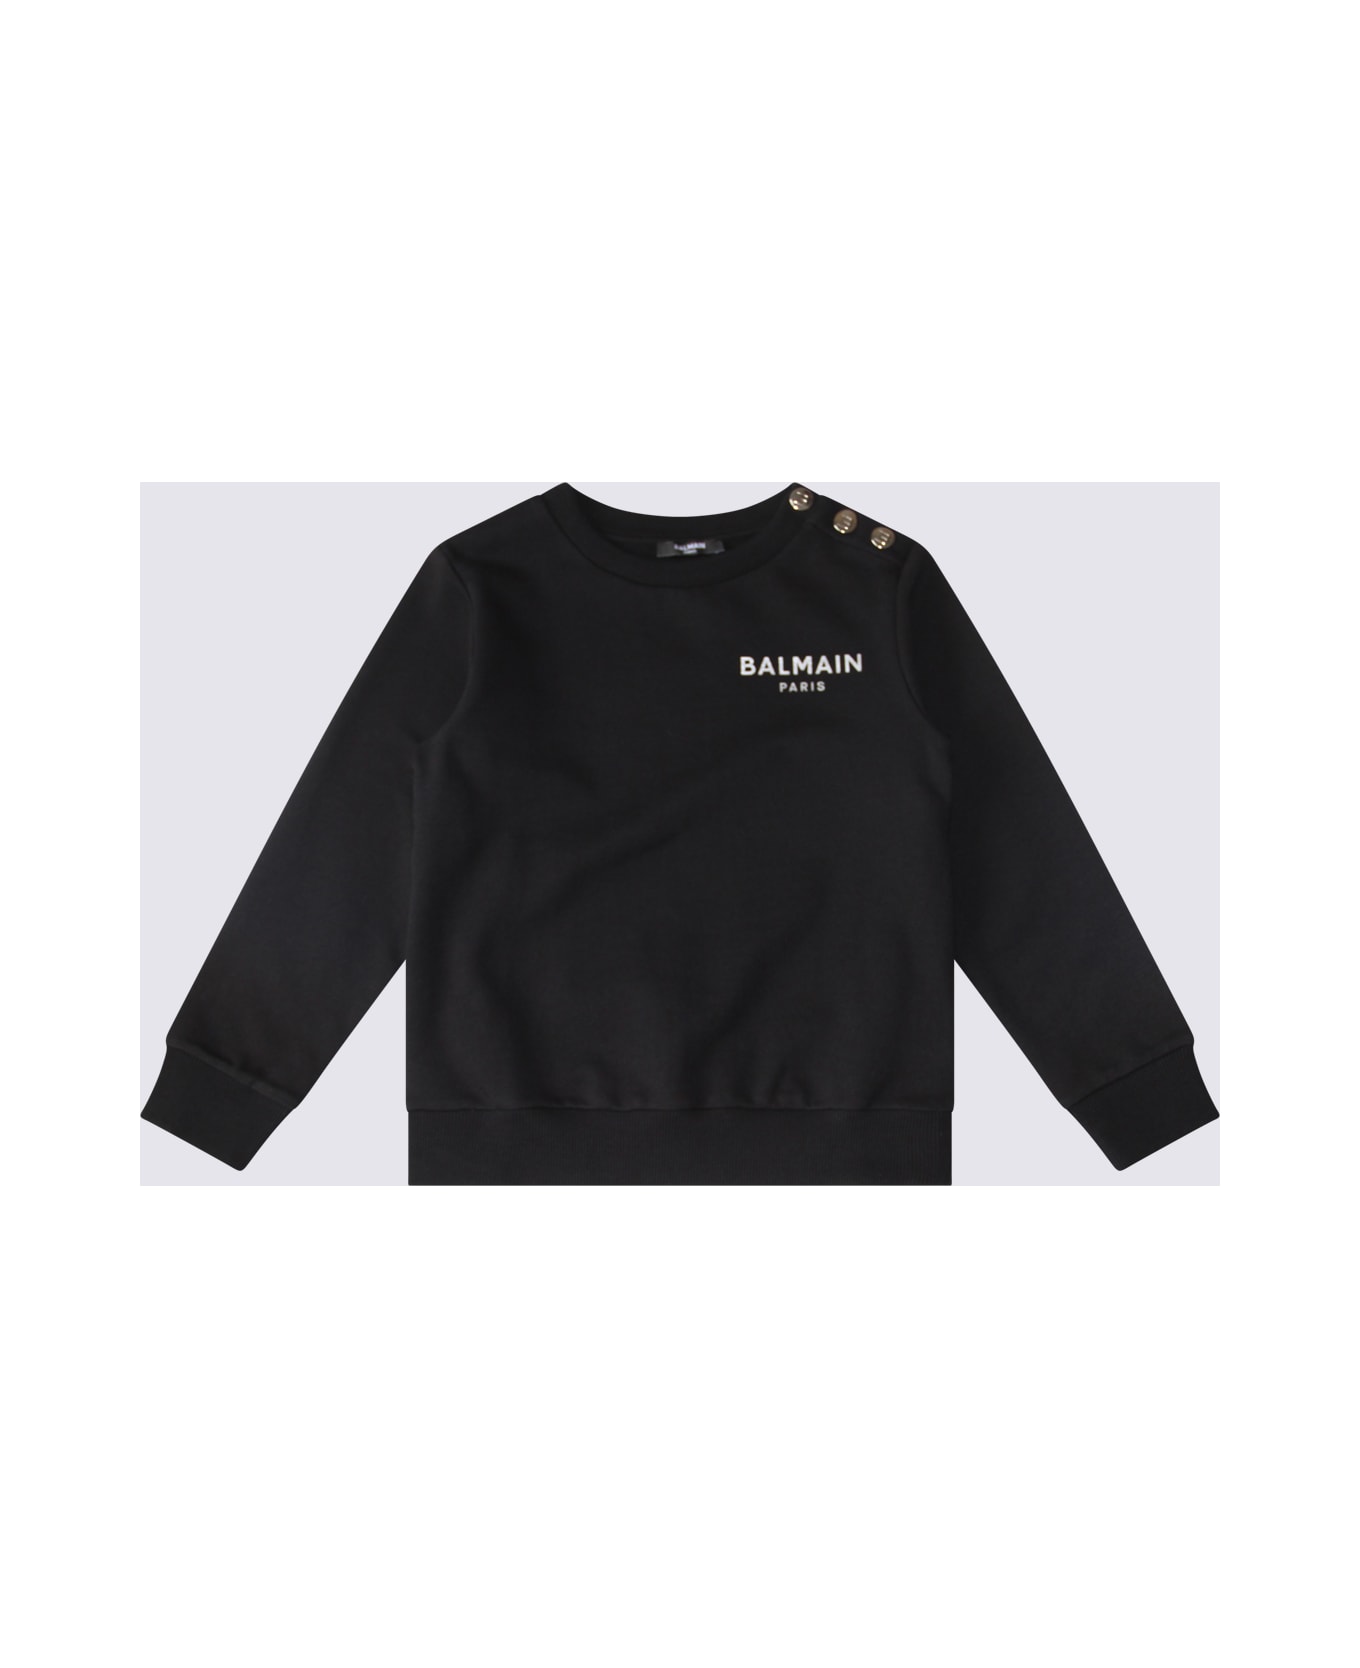 Balmain Black And Silver Sweatshirt - Black